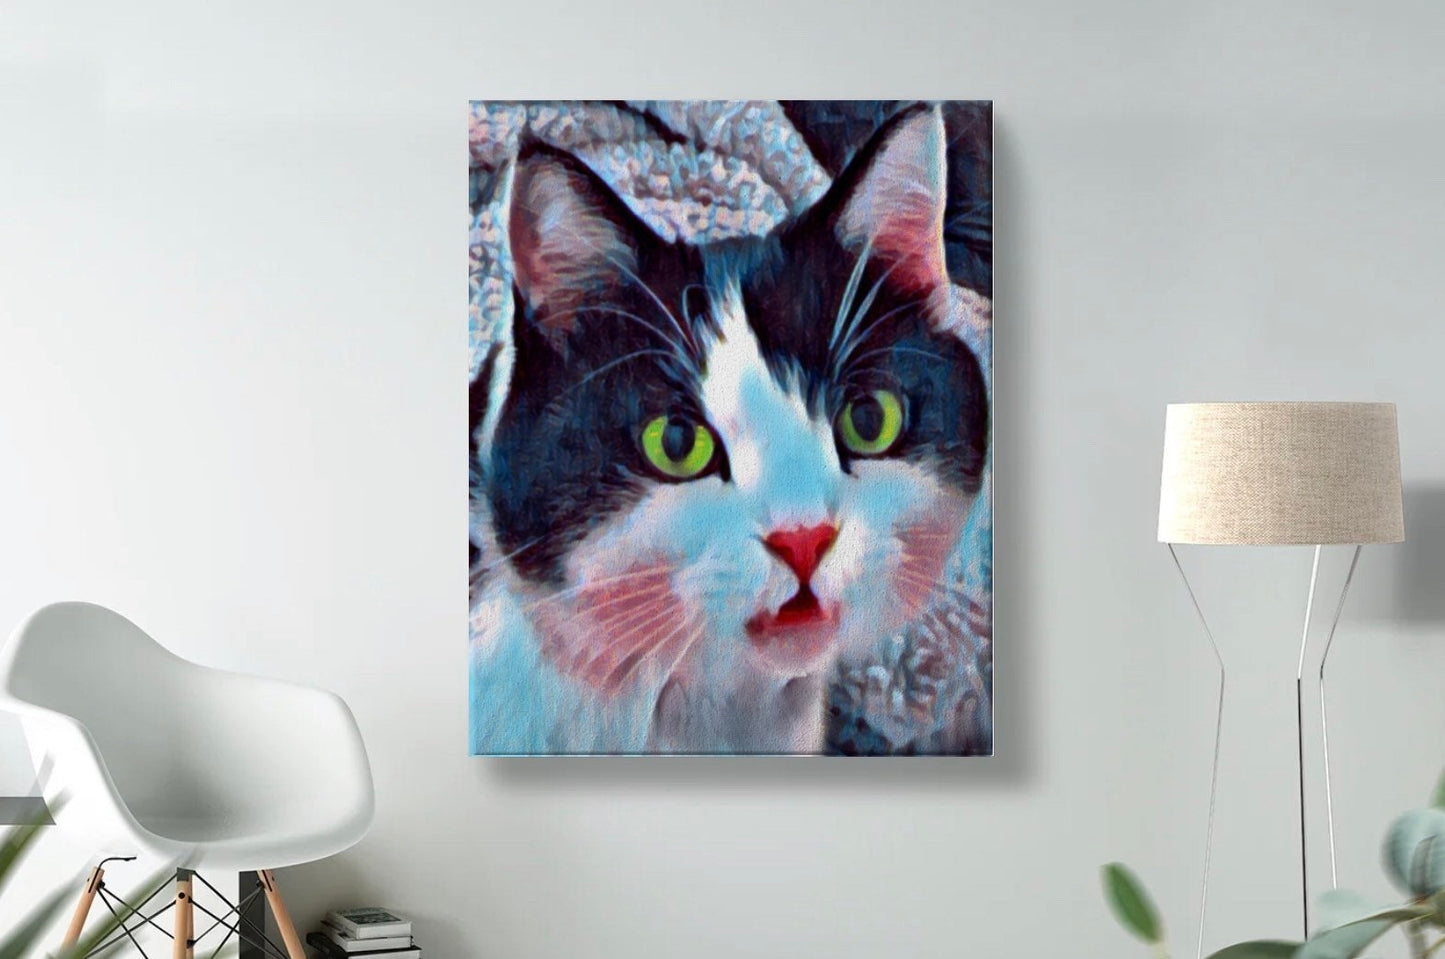 Pet Portrait, Custom Made, Made To Order, Canvas Print, Stretched Canvas, Dog, Cat, Bird, Fish, Horse, Art, Wall Art - A. Mandaline Art